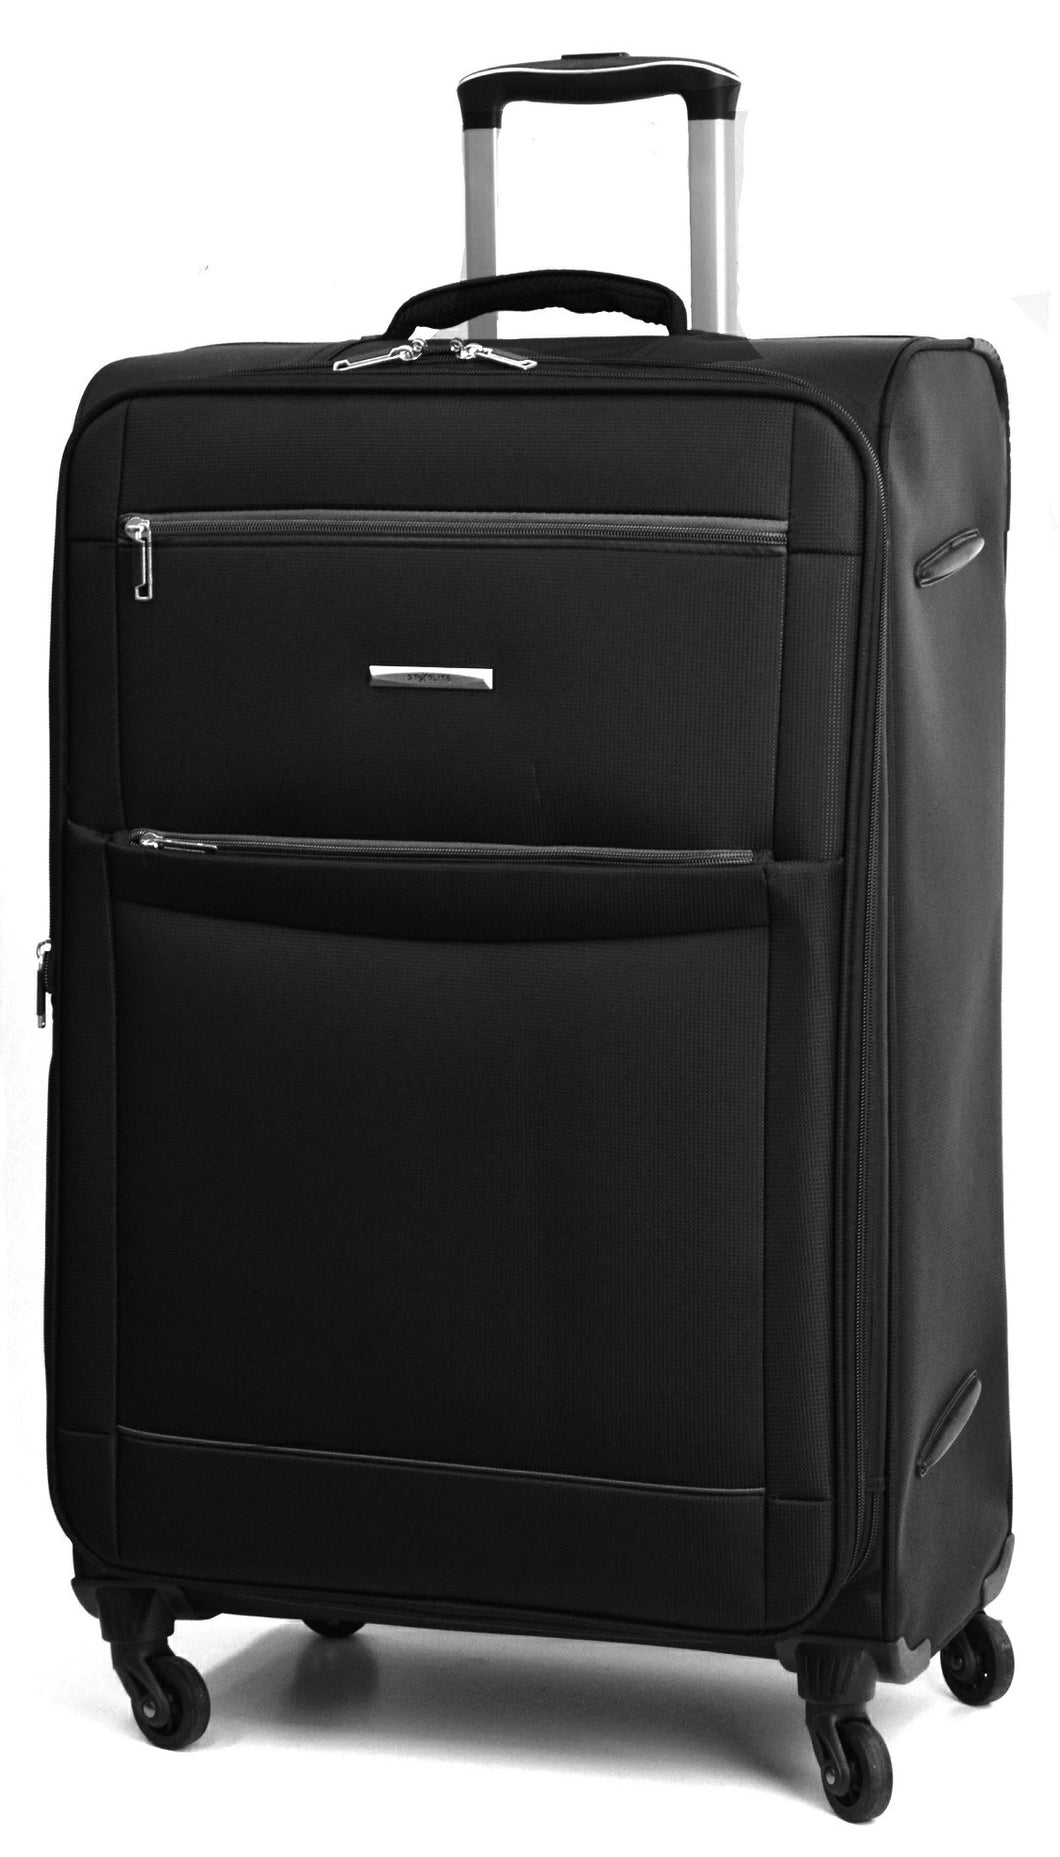 Special offer Brand New 4 Wheel Ultra Lightweight Suitcase – DK